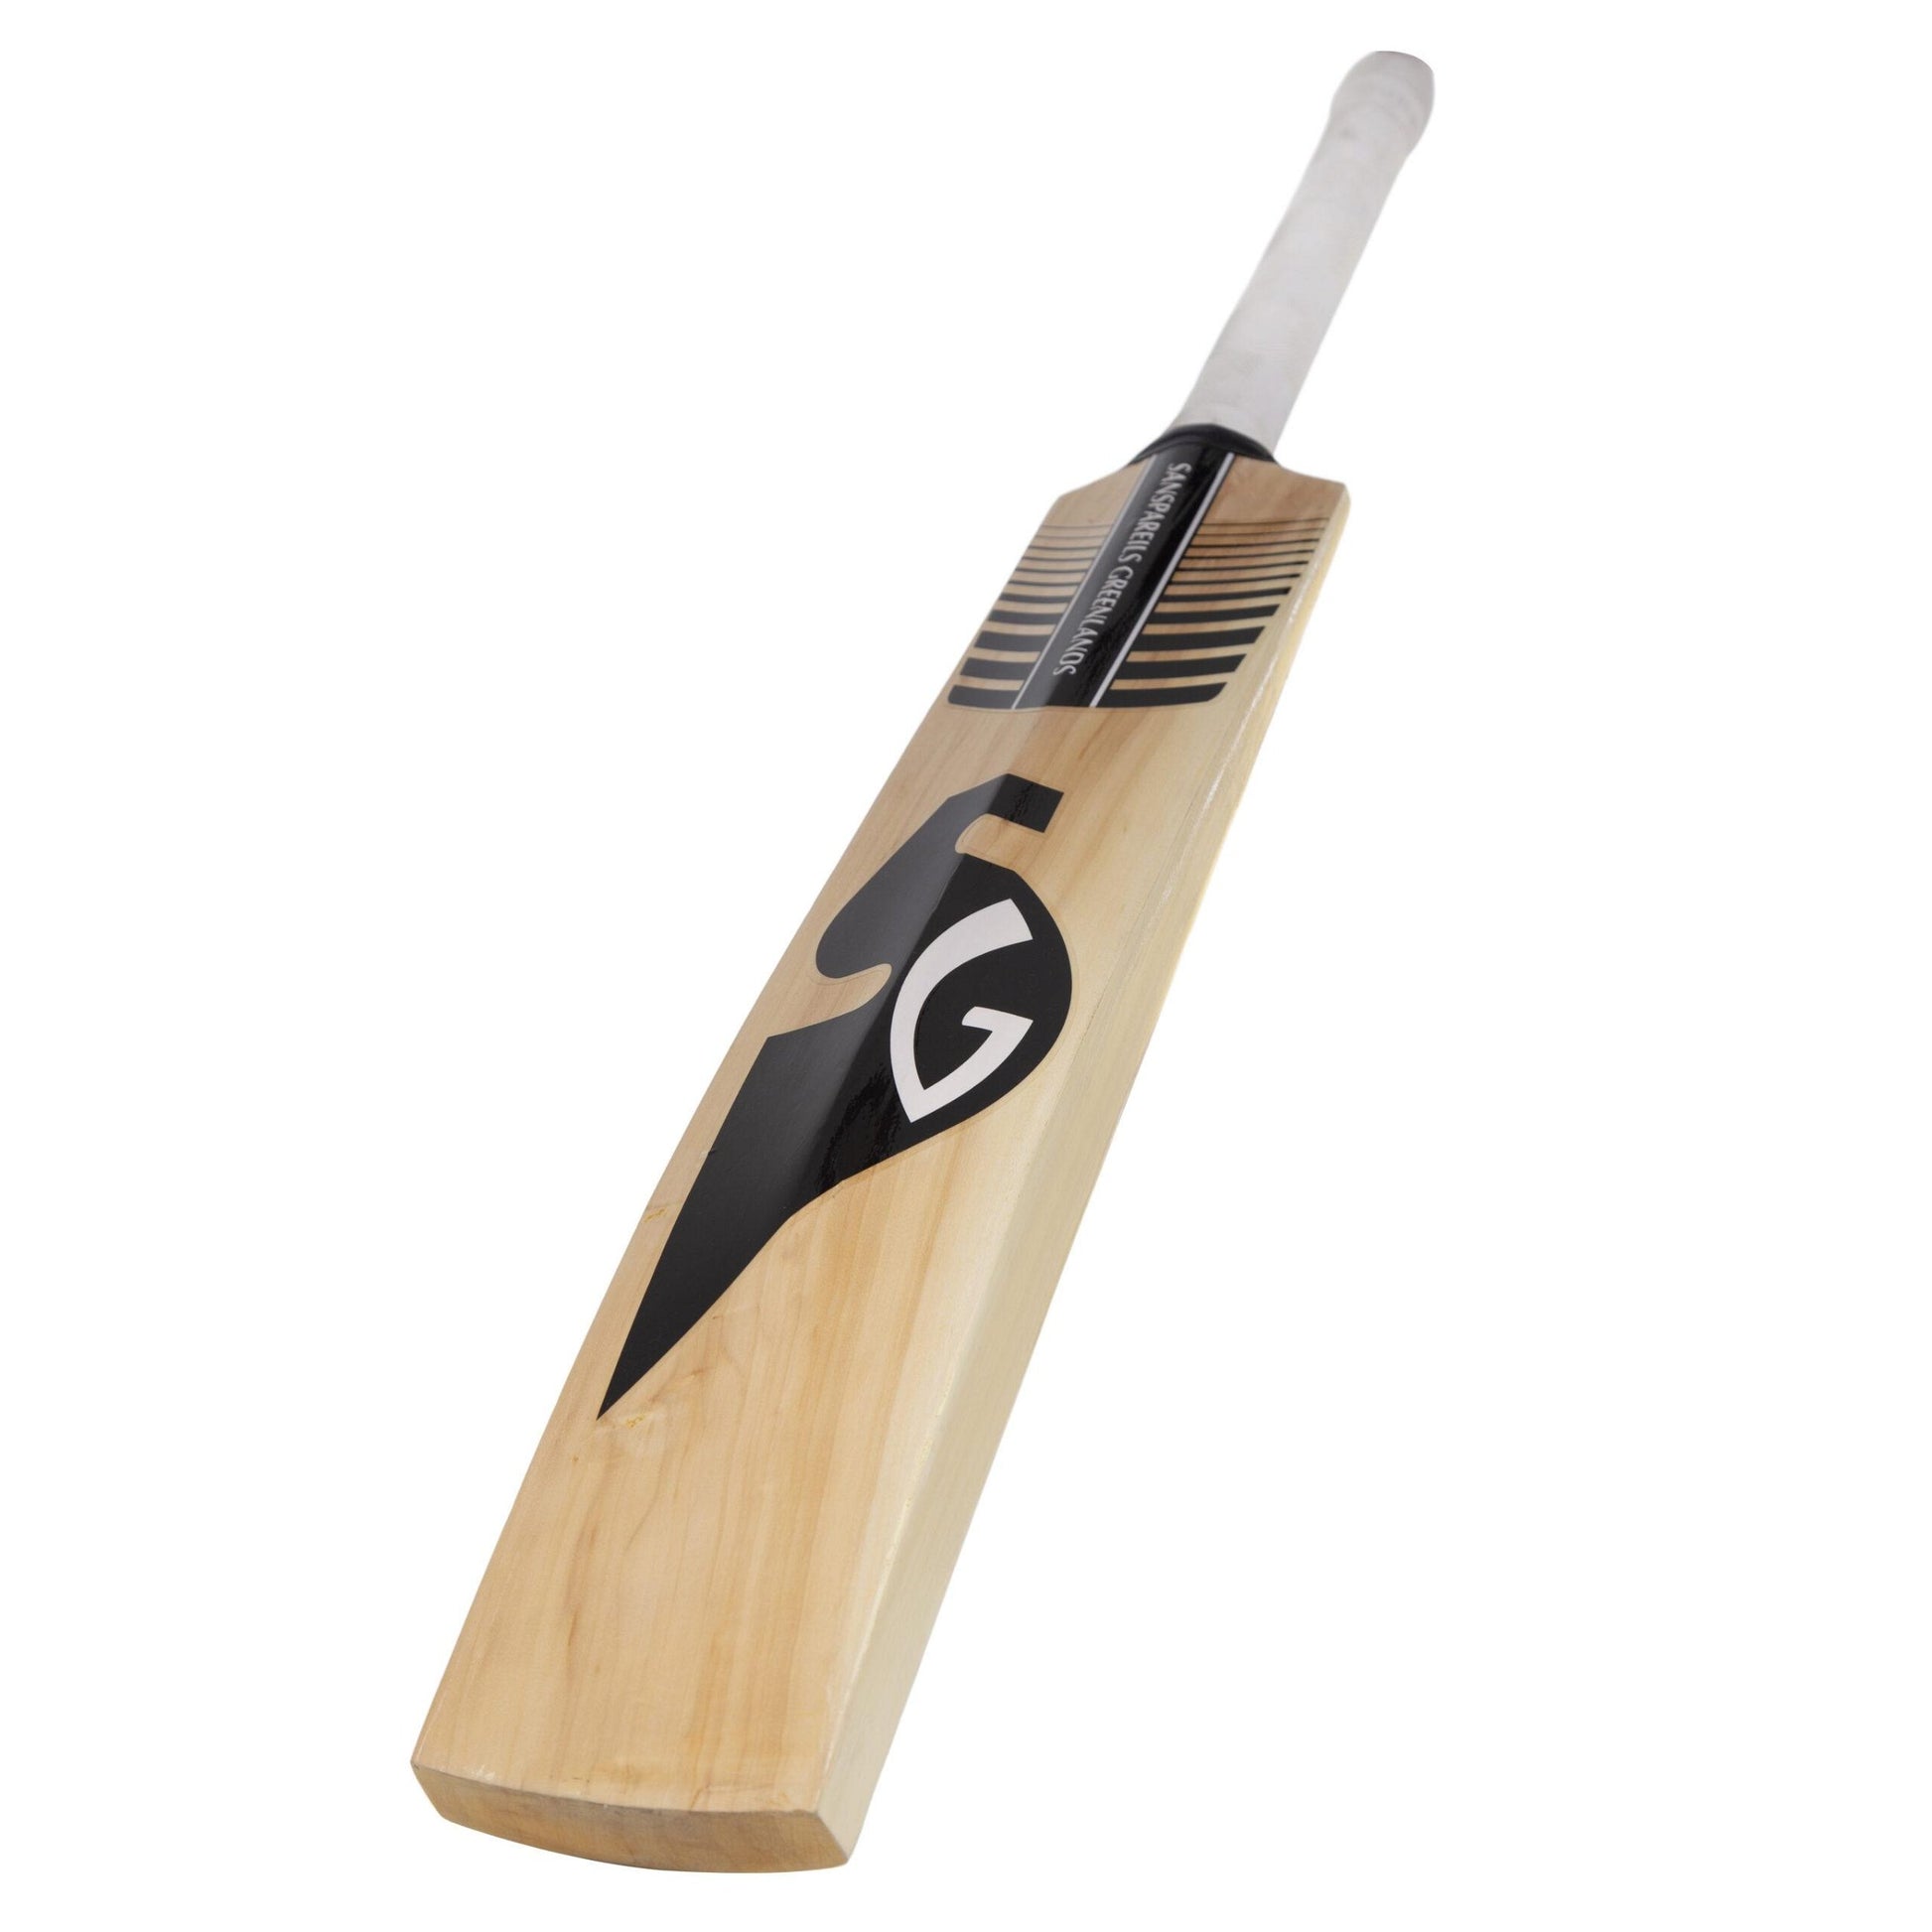 SG Hiscore Classic English Willow Cricket bat